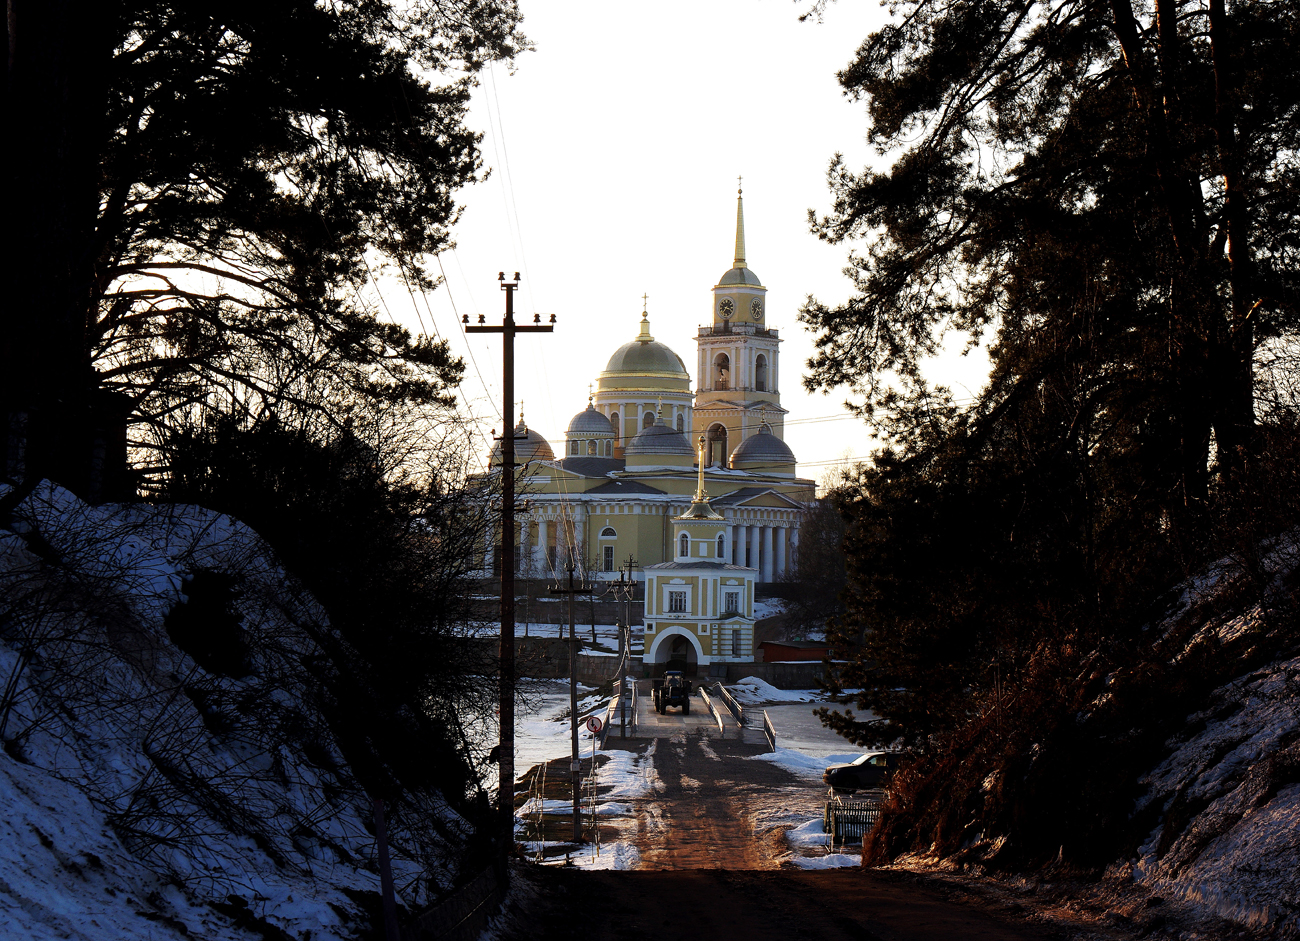 The Nilo-Stolobenskaya Hermitage Russian Orthodox monastery on Lake Seliger